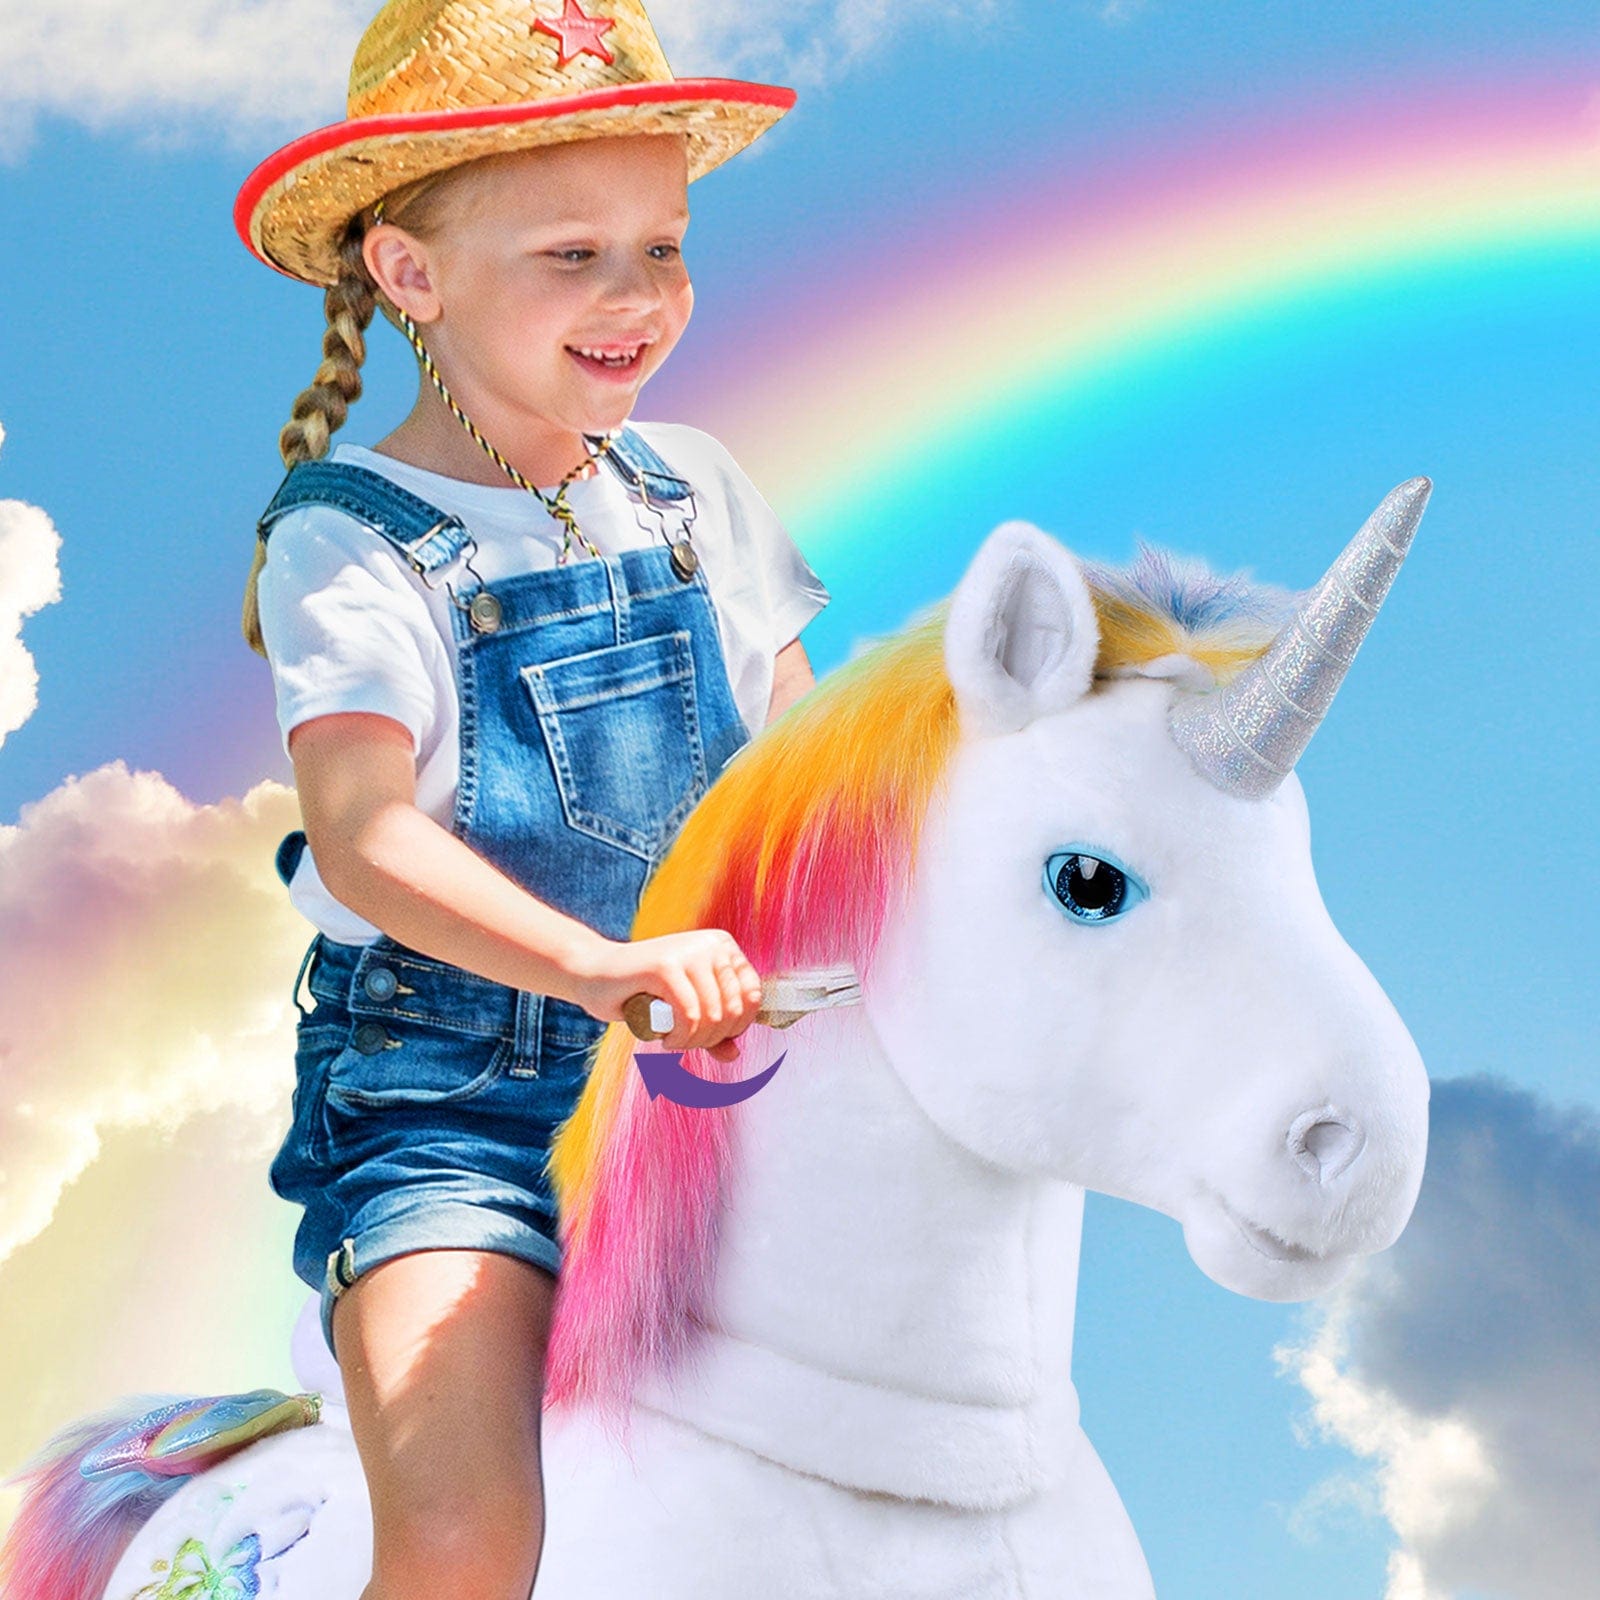 PonyCycle, Inc. Unicorn Ride On Toy for Age 3-5 Rainbow Model X